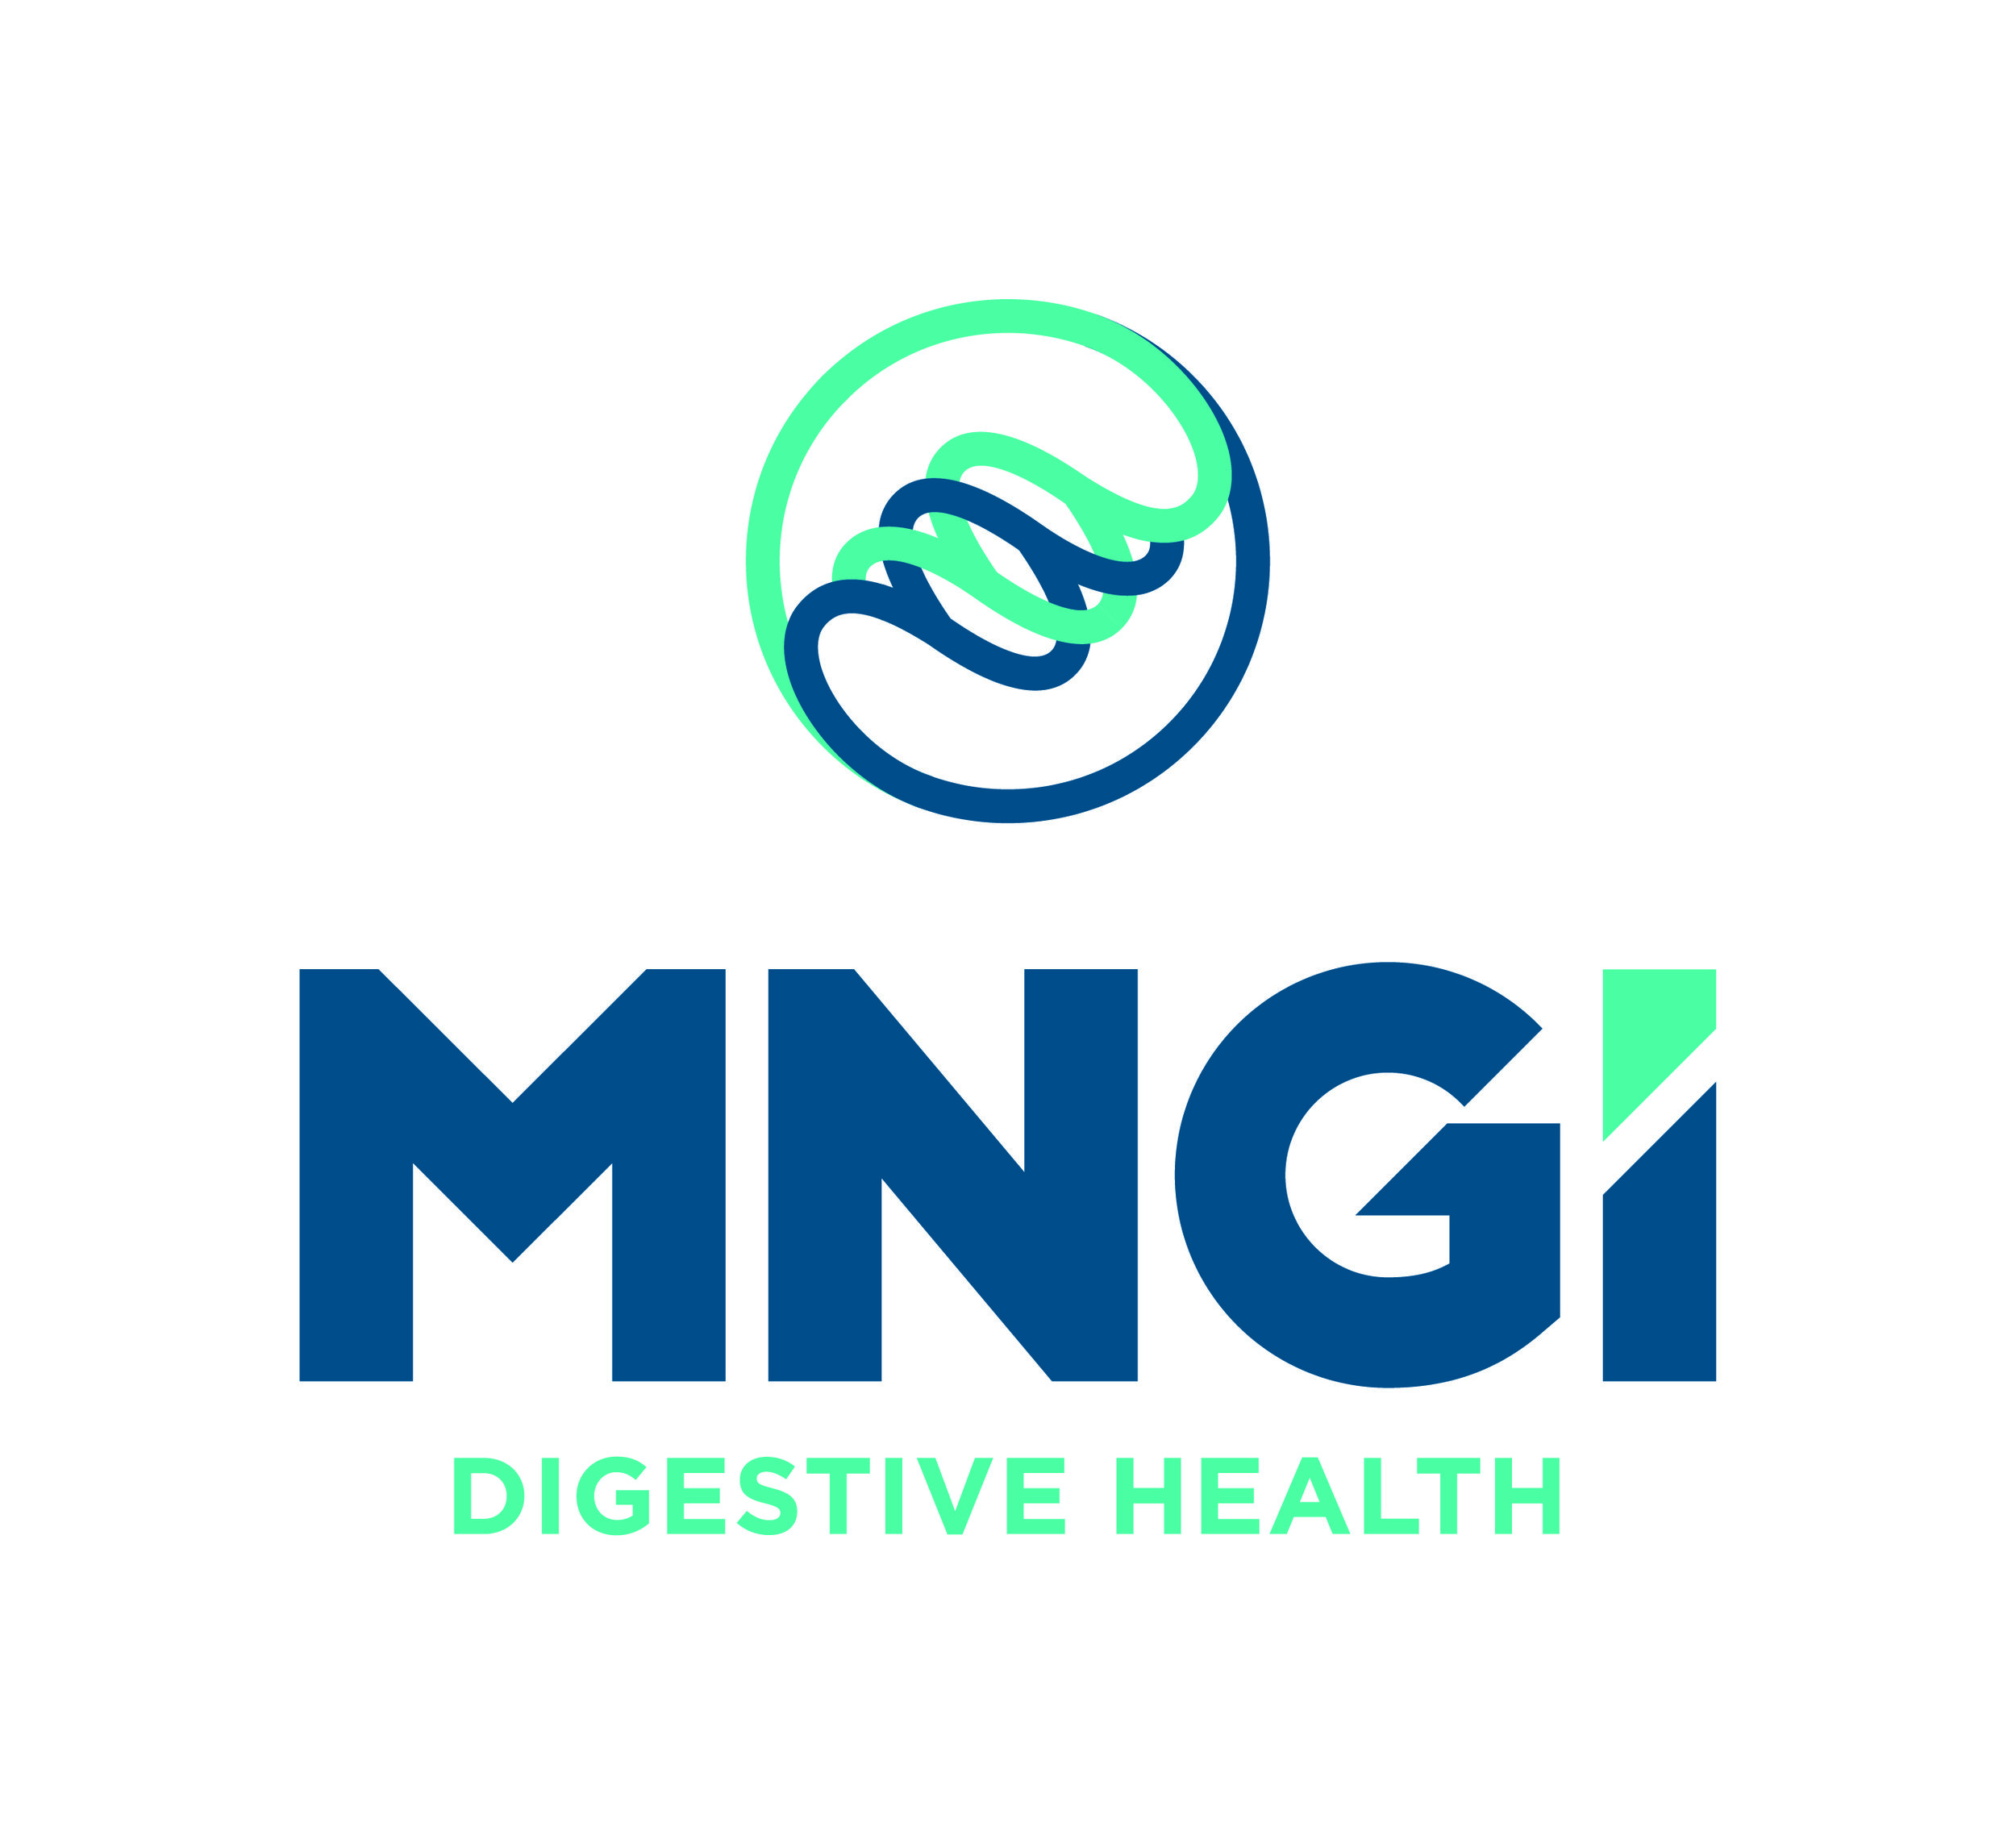 MNGI Digestive Health logo cmyk.jpg